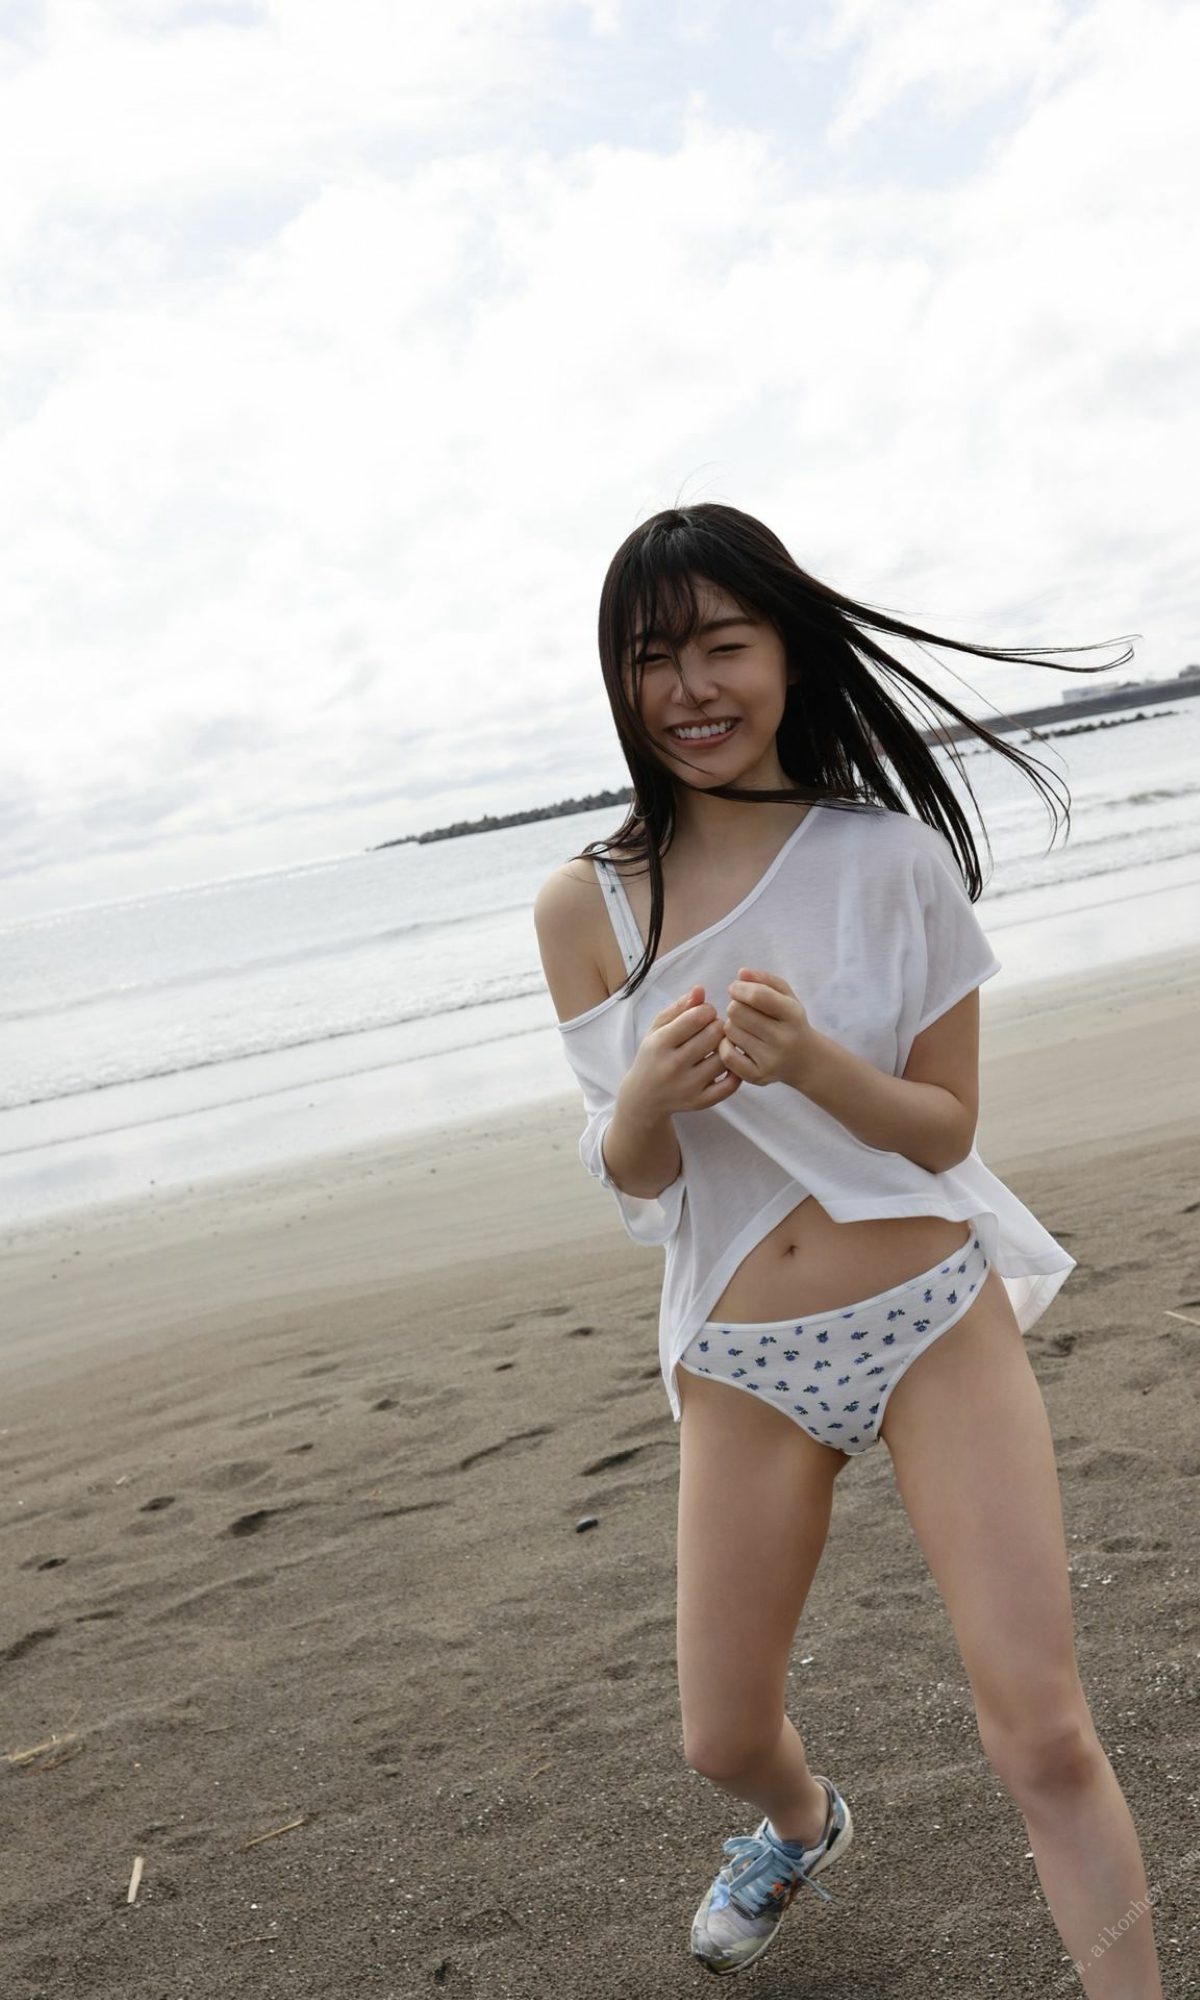 Weekly Photobook 2022 04 25 Tsubomi つぼみ Last full nude ラスト フルヌード 6 2289189962.jpg